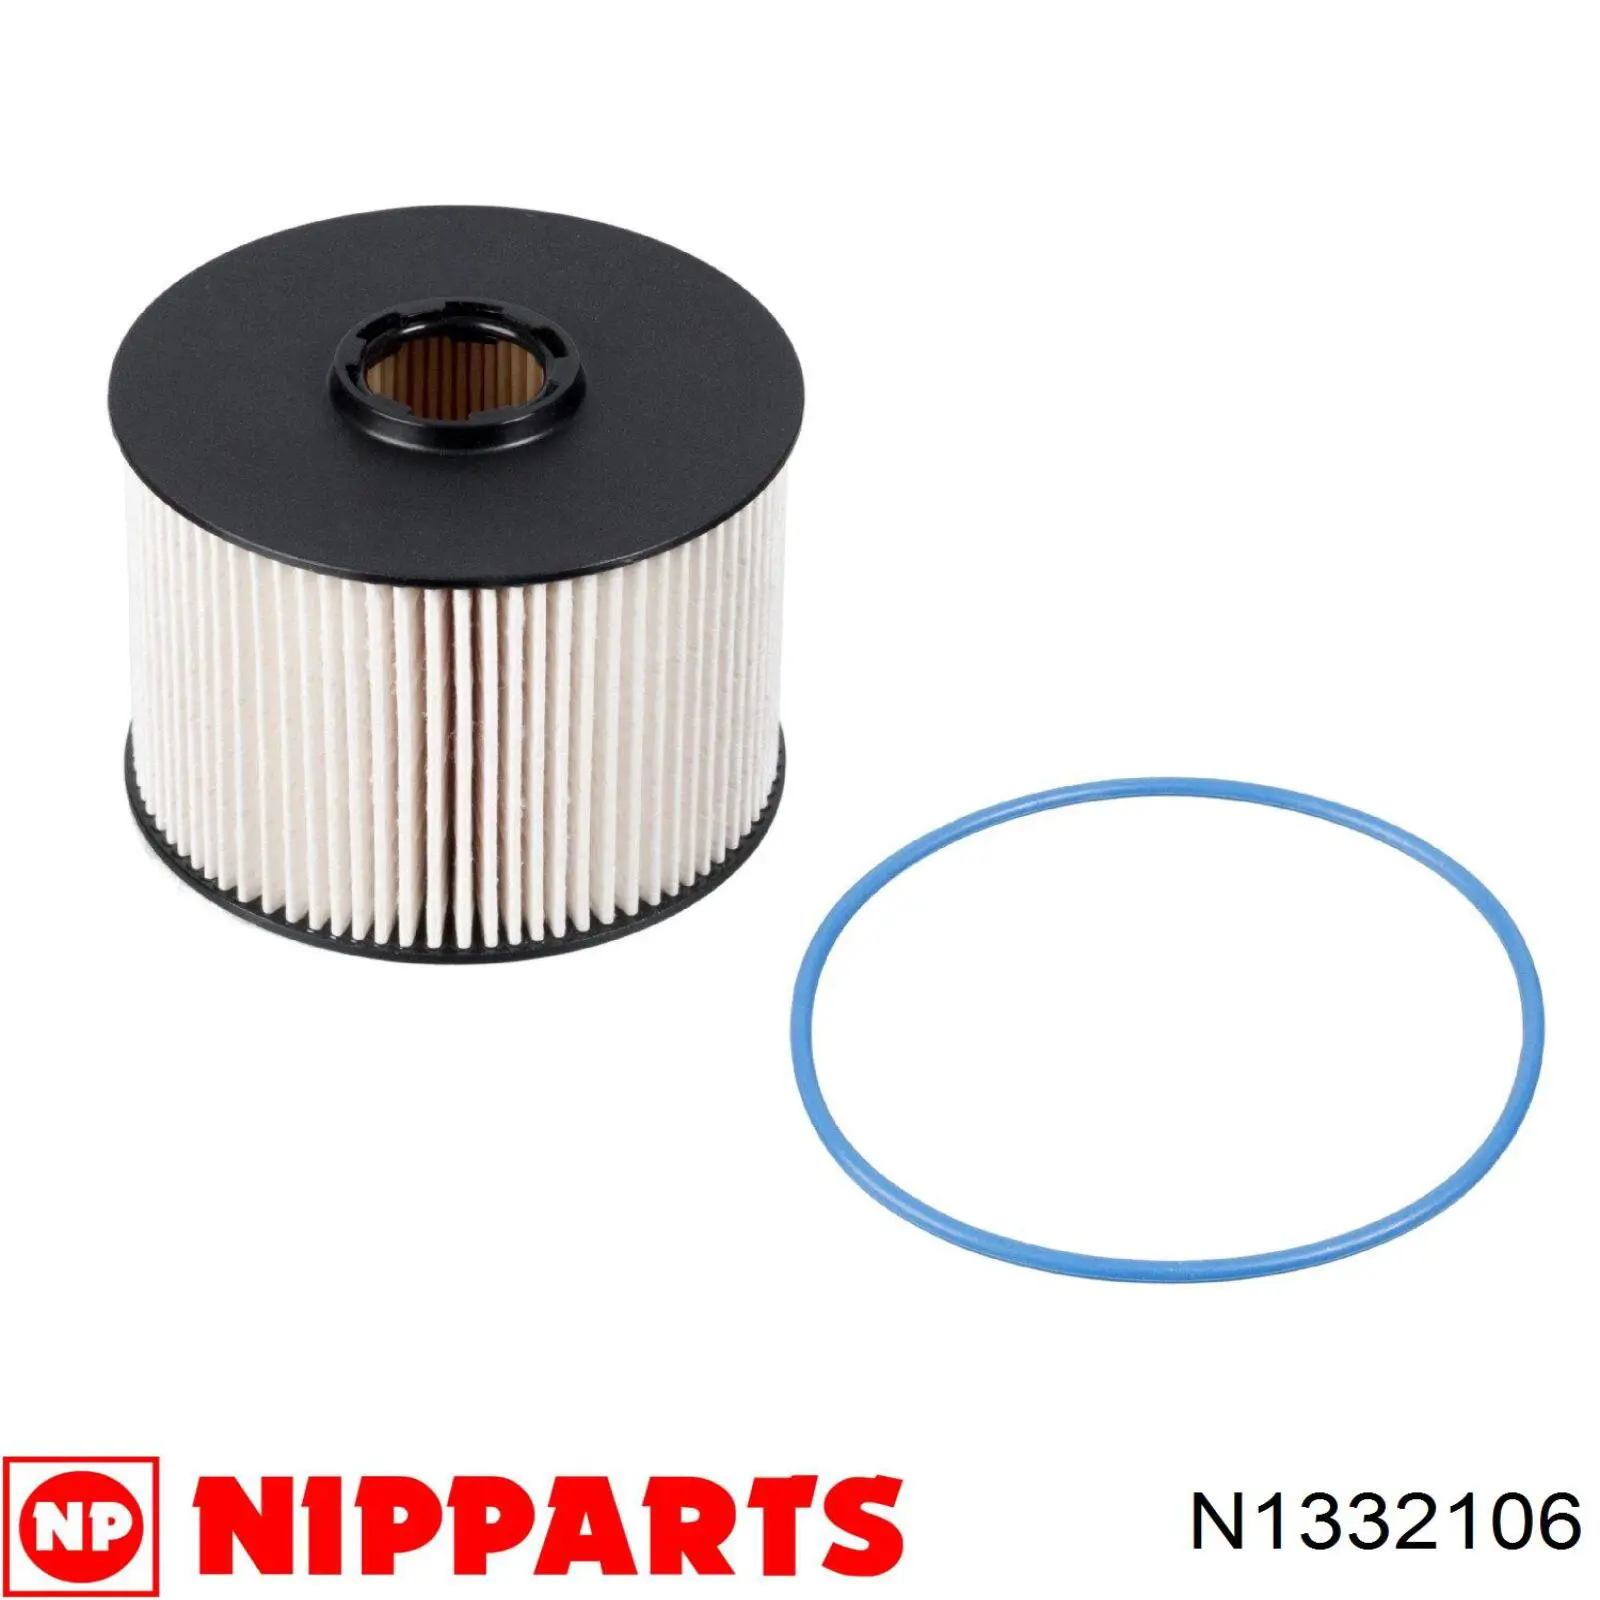 N1332106 Nipparts filtro combustible